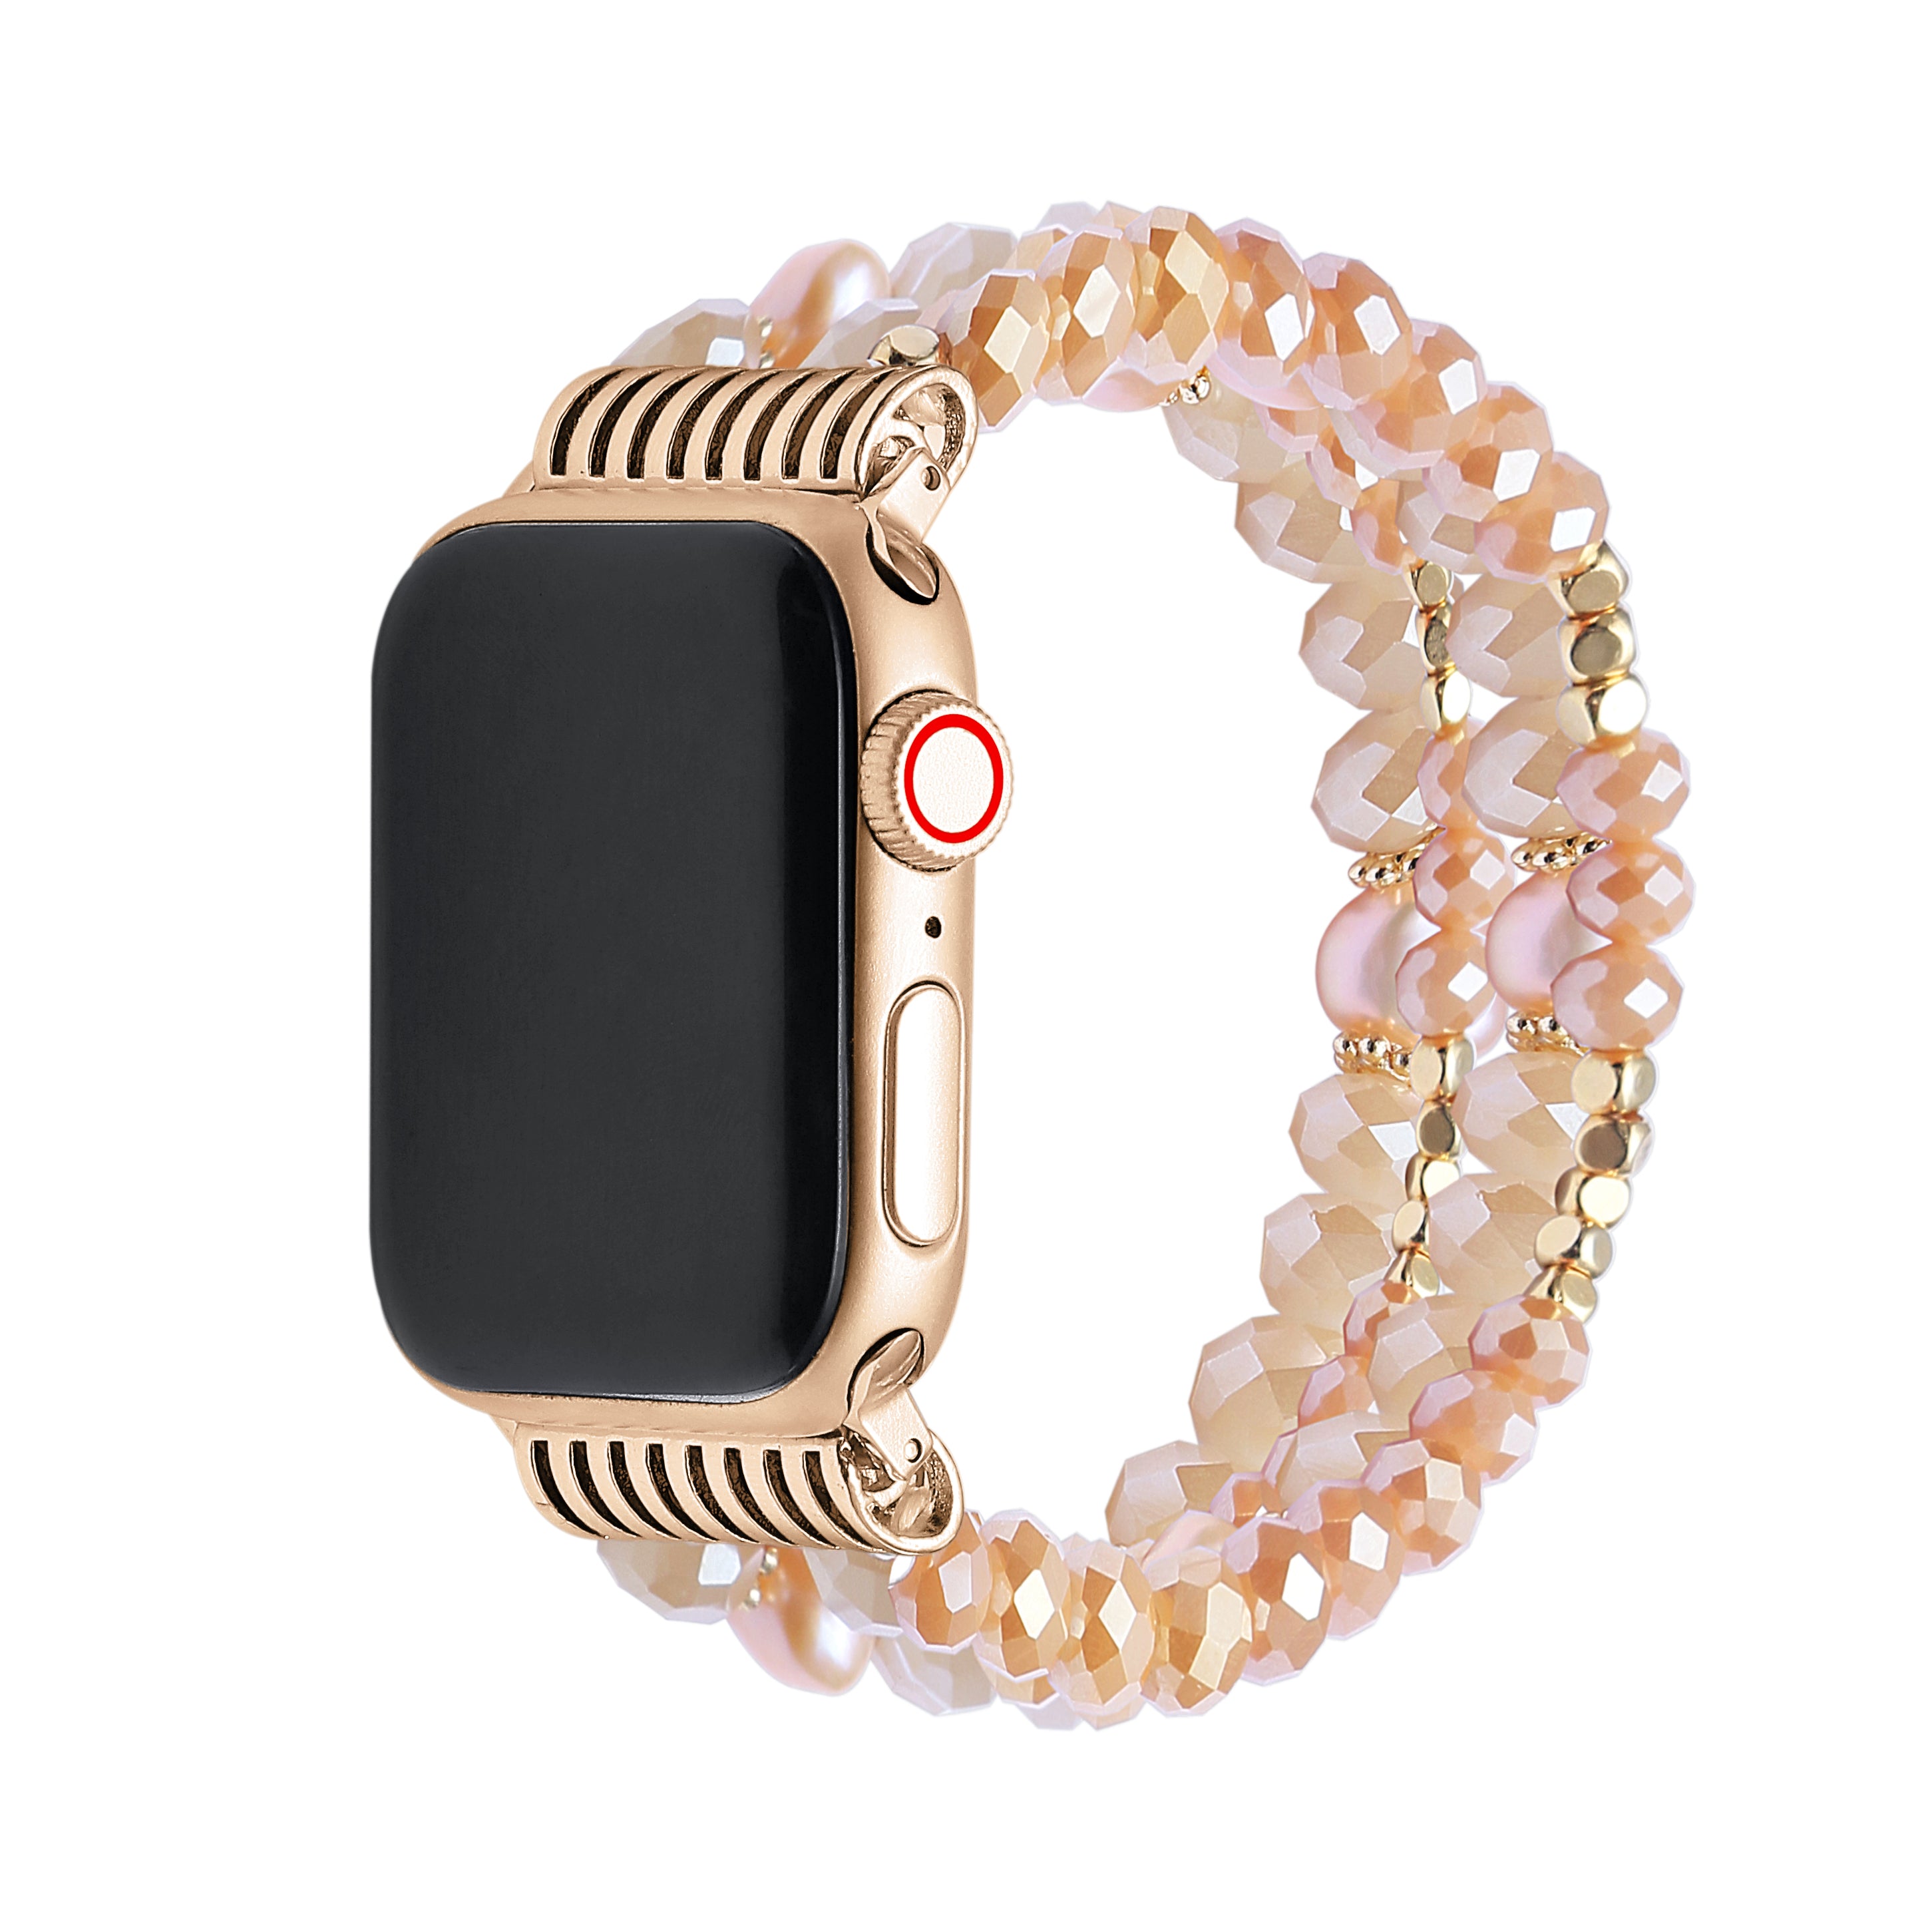 DIY Apple Watch Band | Diy watch band, Apple watch, Apple watch wristbands